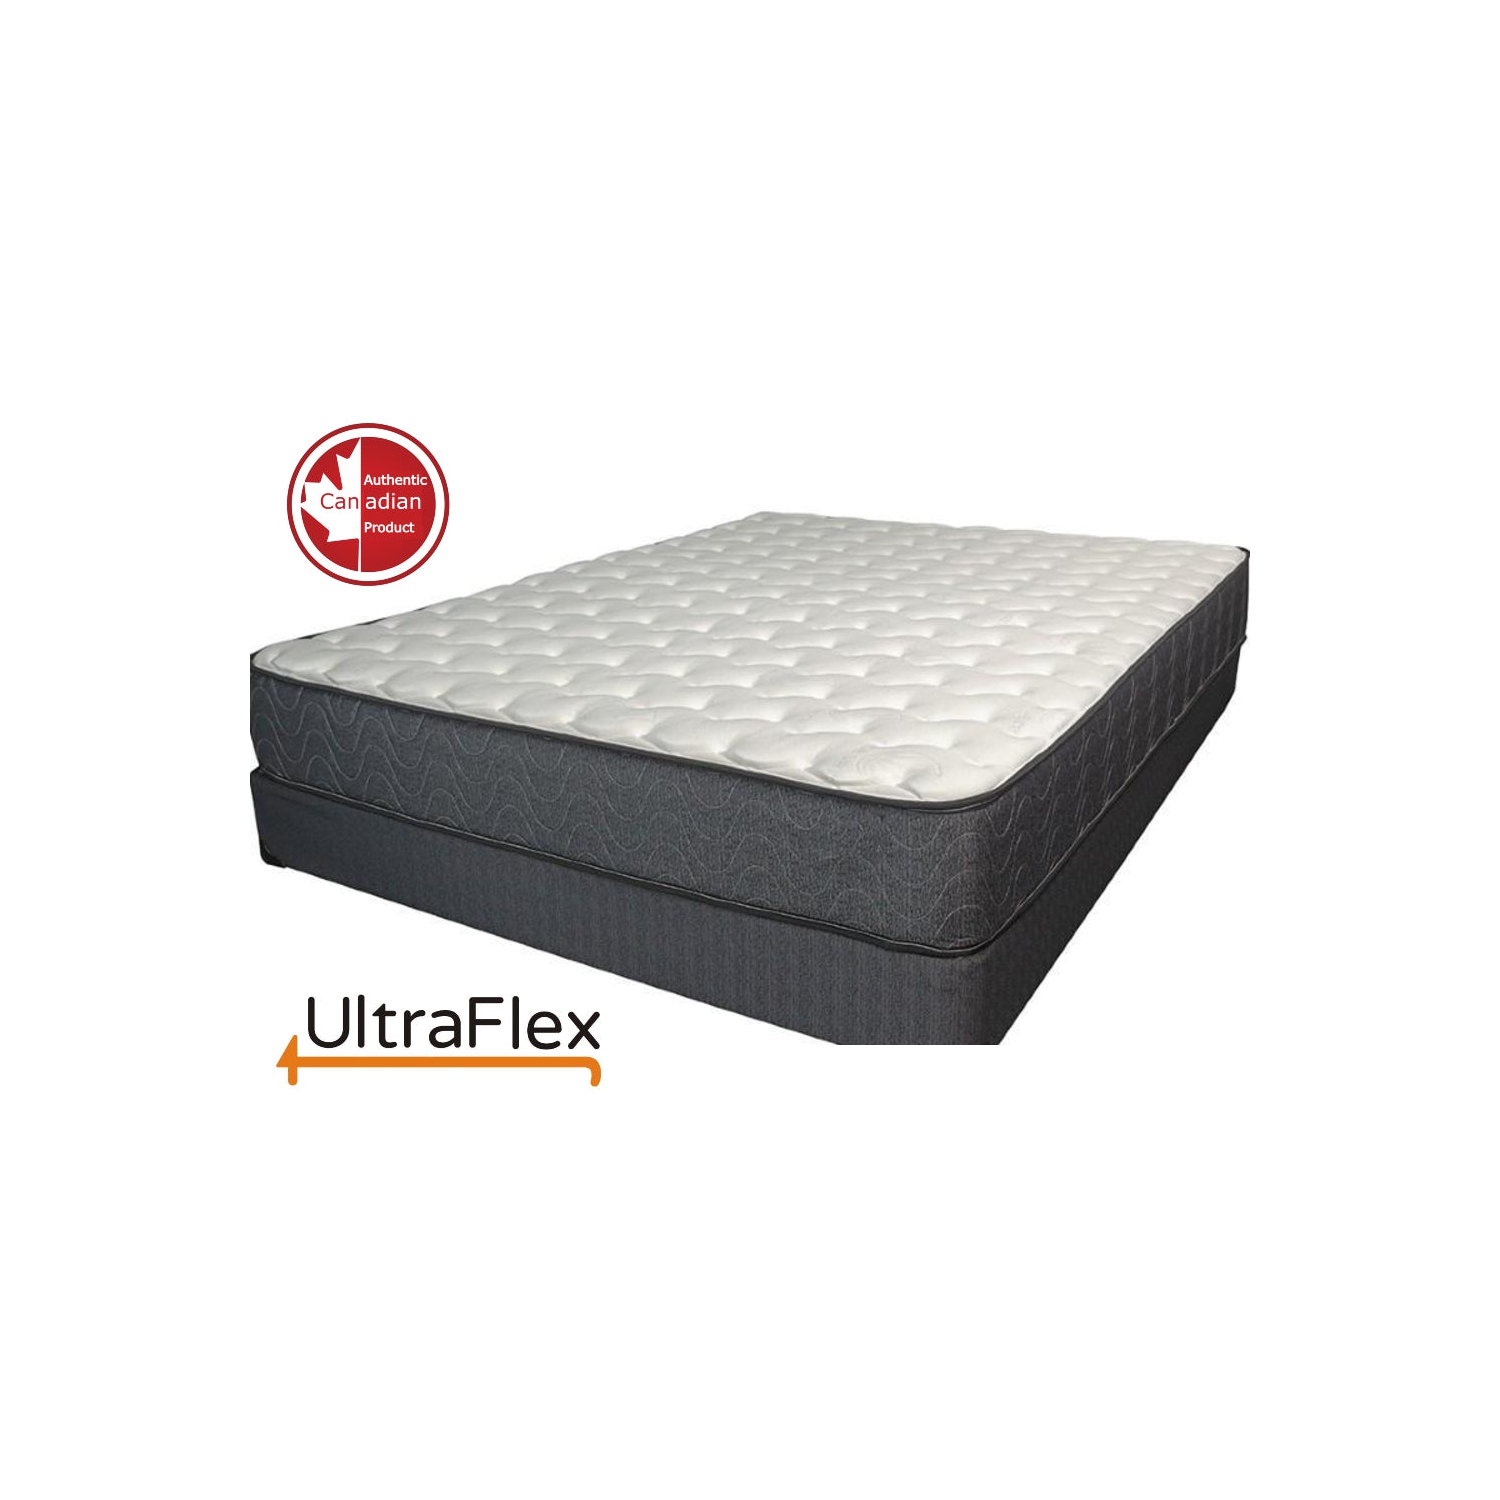 Ultraflex CLASSIC- Orthopedic Luxury Gel Memory Foam, Eco-friendly Mattress (Made in Canada)- Double/Full Size